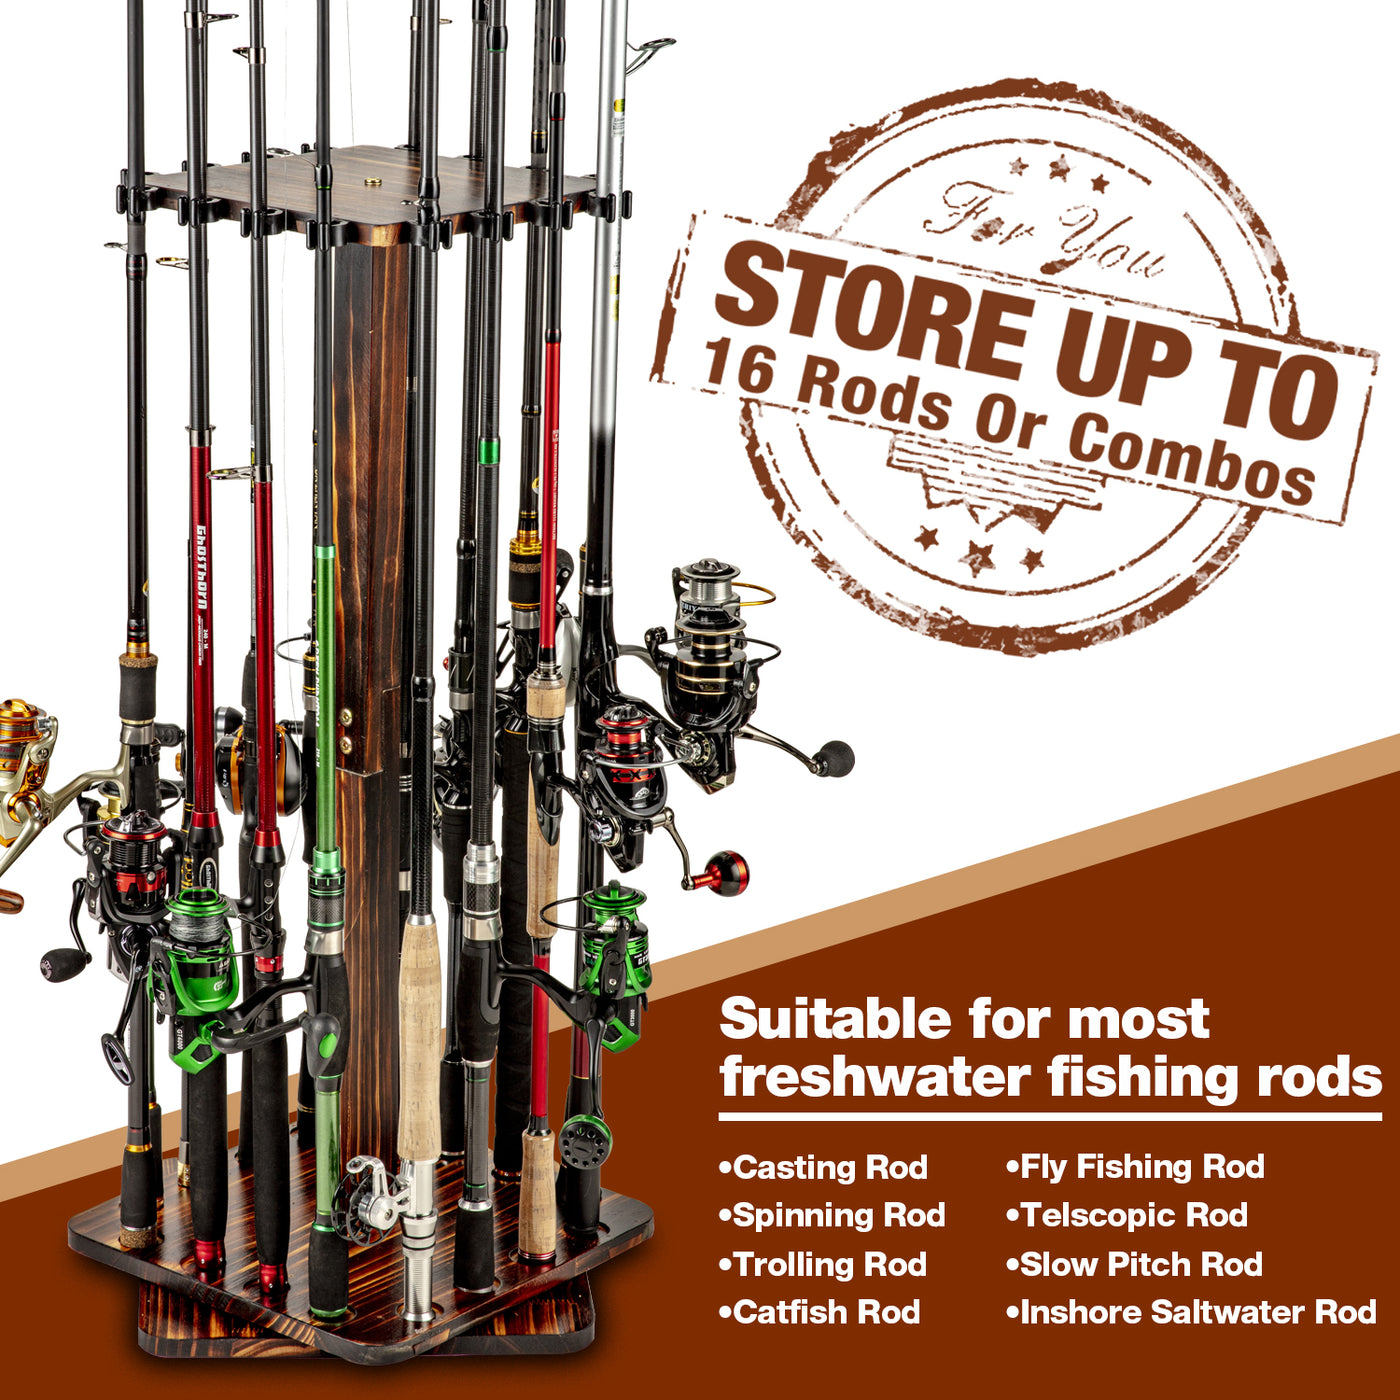 32 fly fishing storage ideas  fishing storage, fishing rod storage,  fishing rod rack